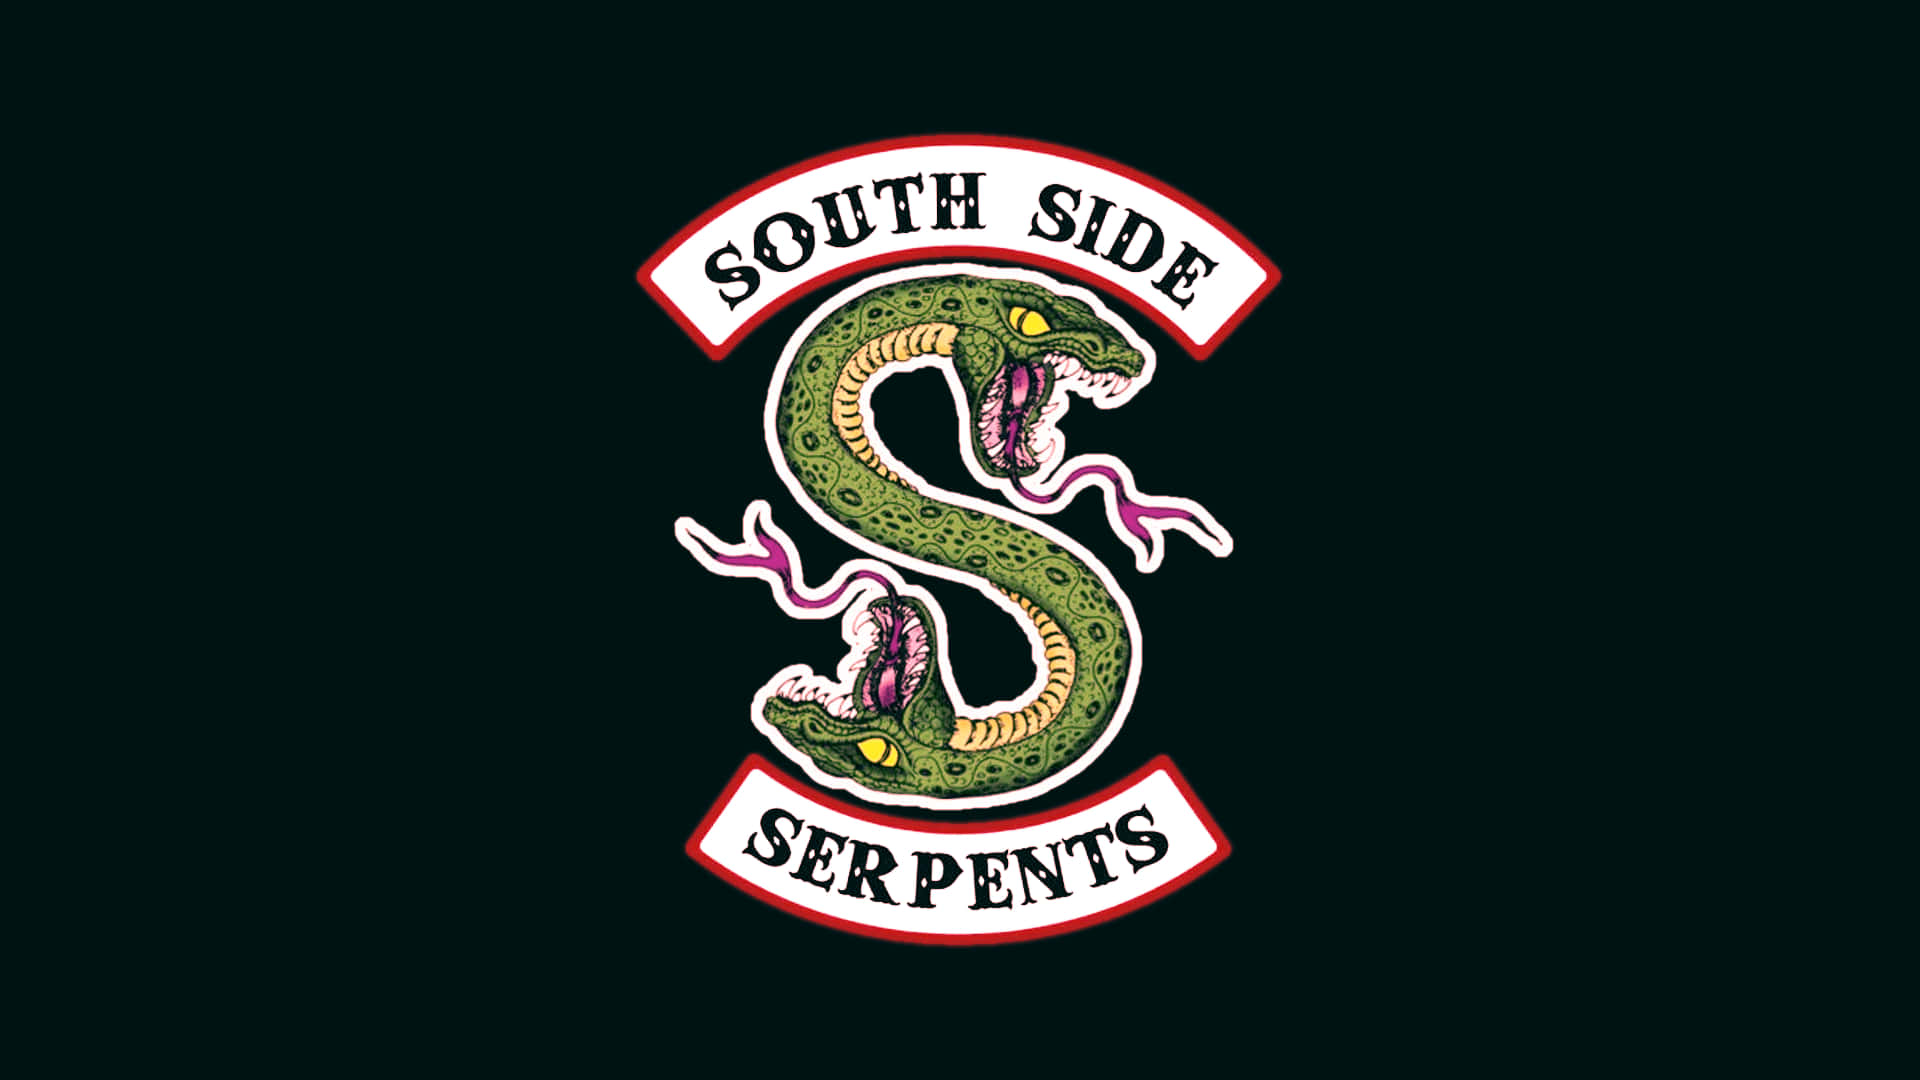 Southside Serpents - Stig Op Wallpaper